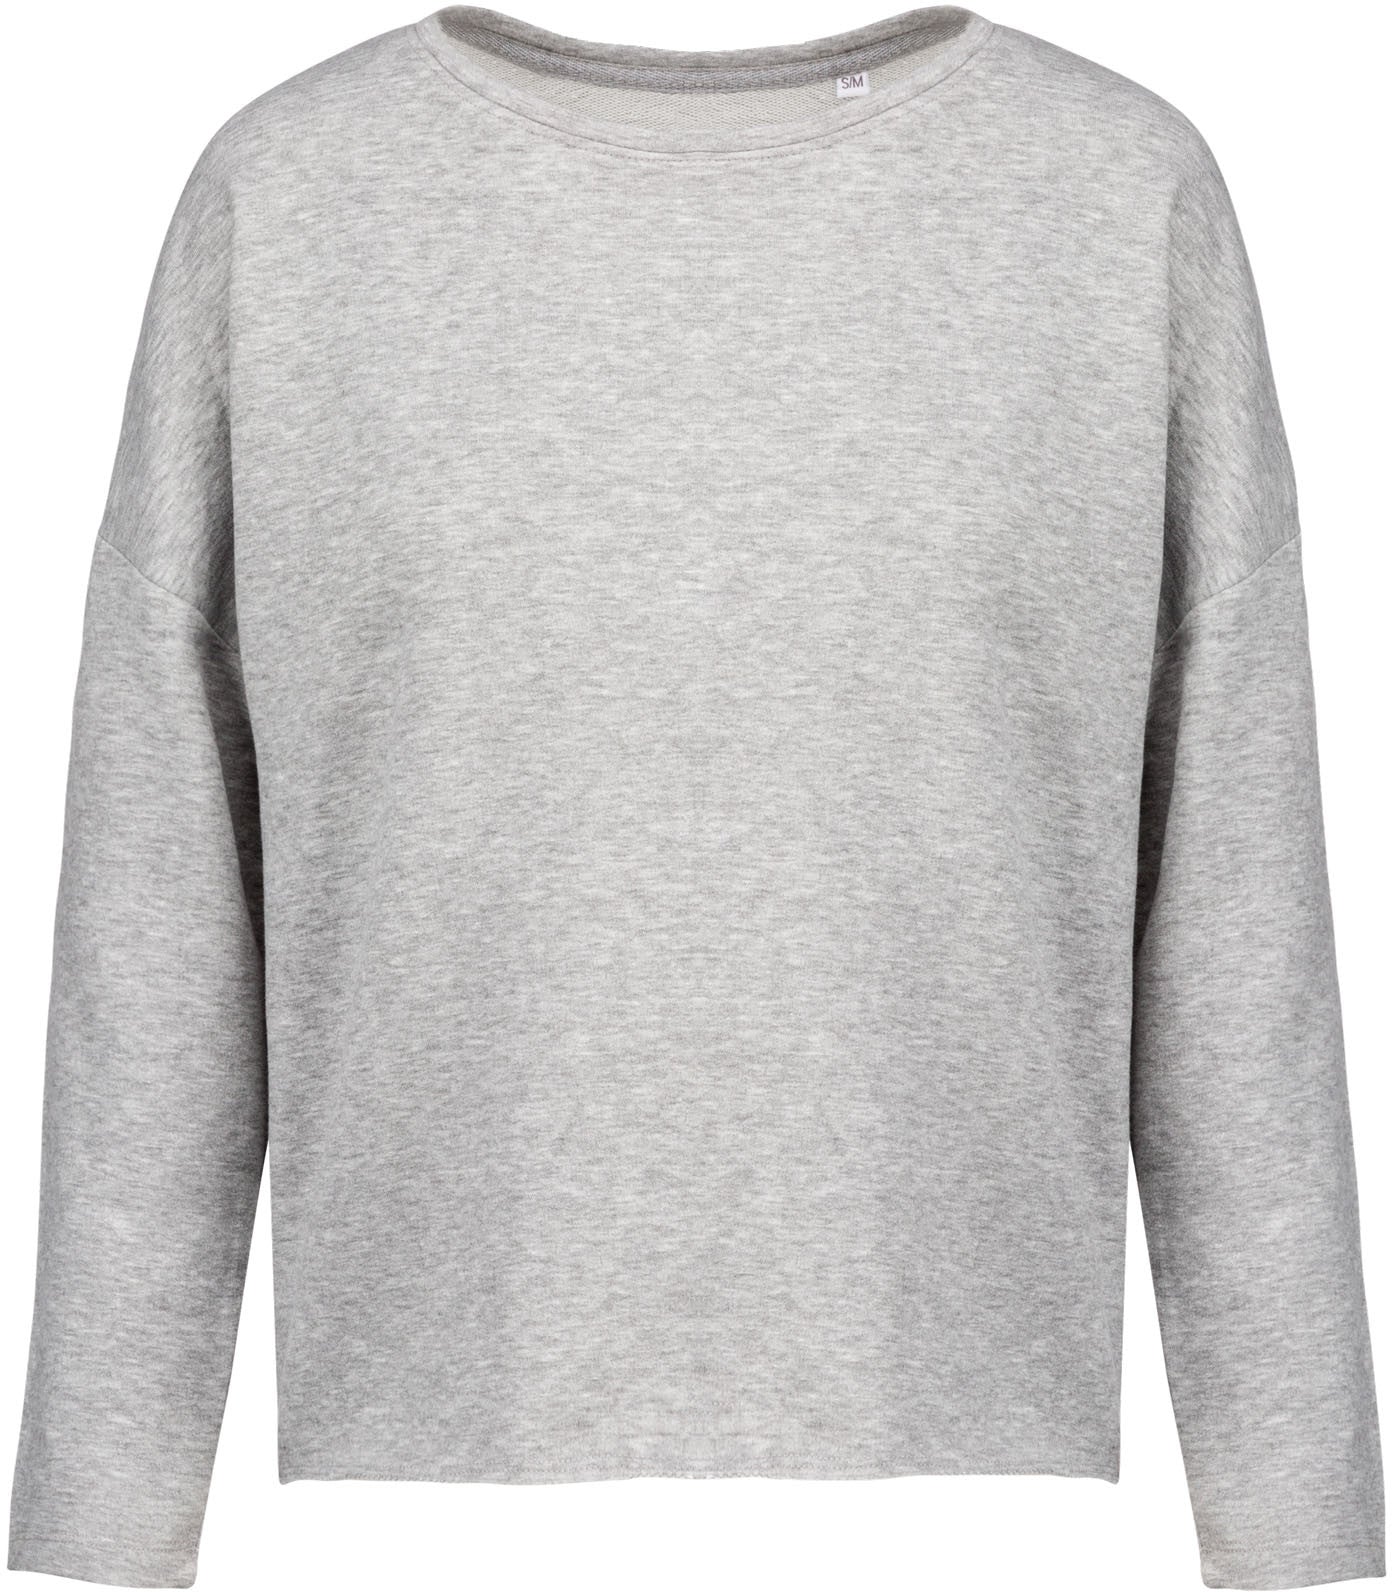 Chillax Sweater - Grey